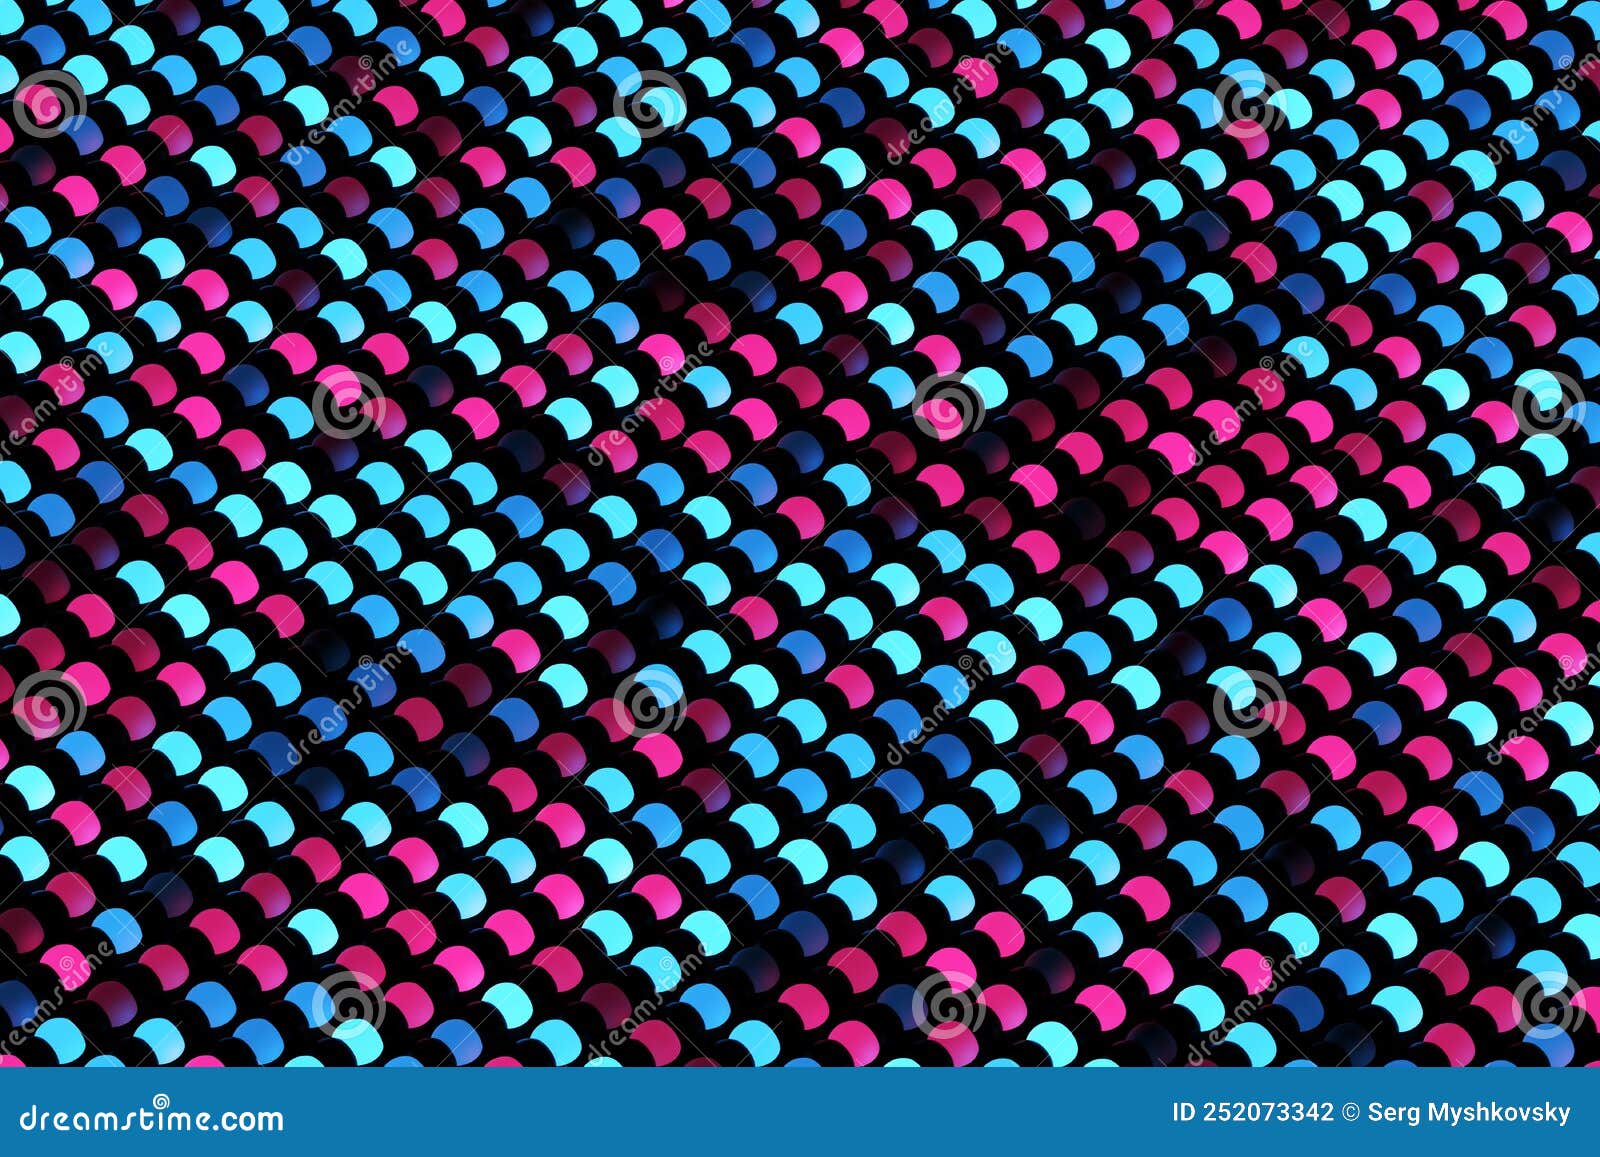 Pop Art Neon Spheres on a Black Background. Stock Illustration ...